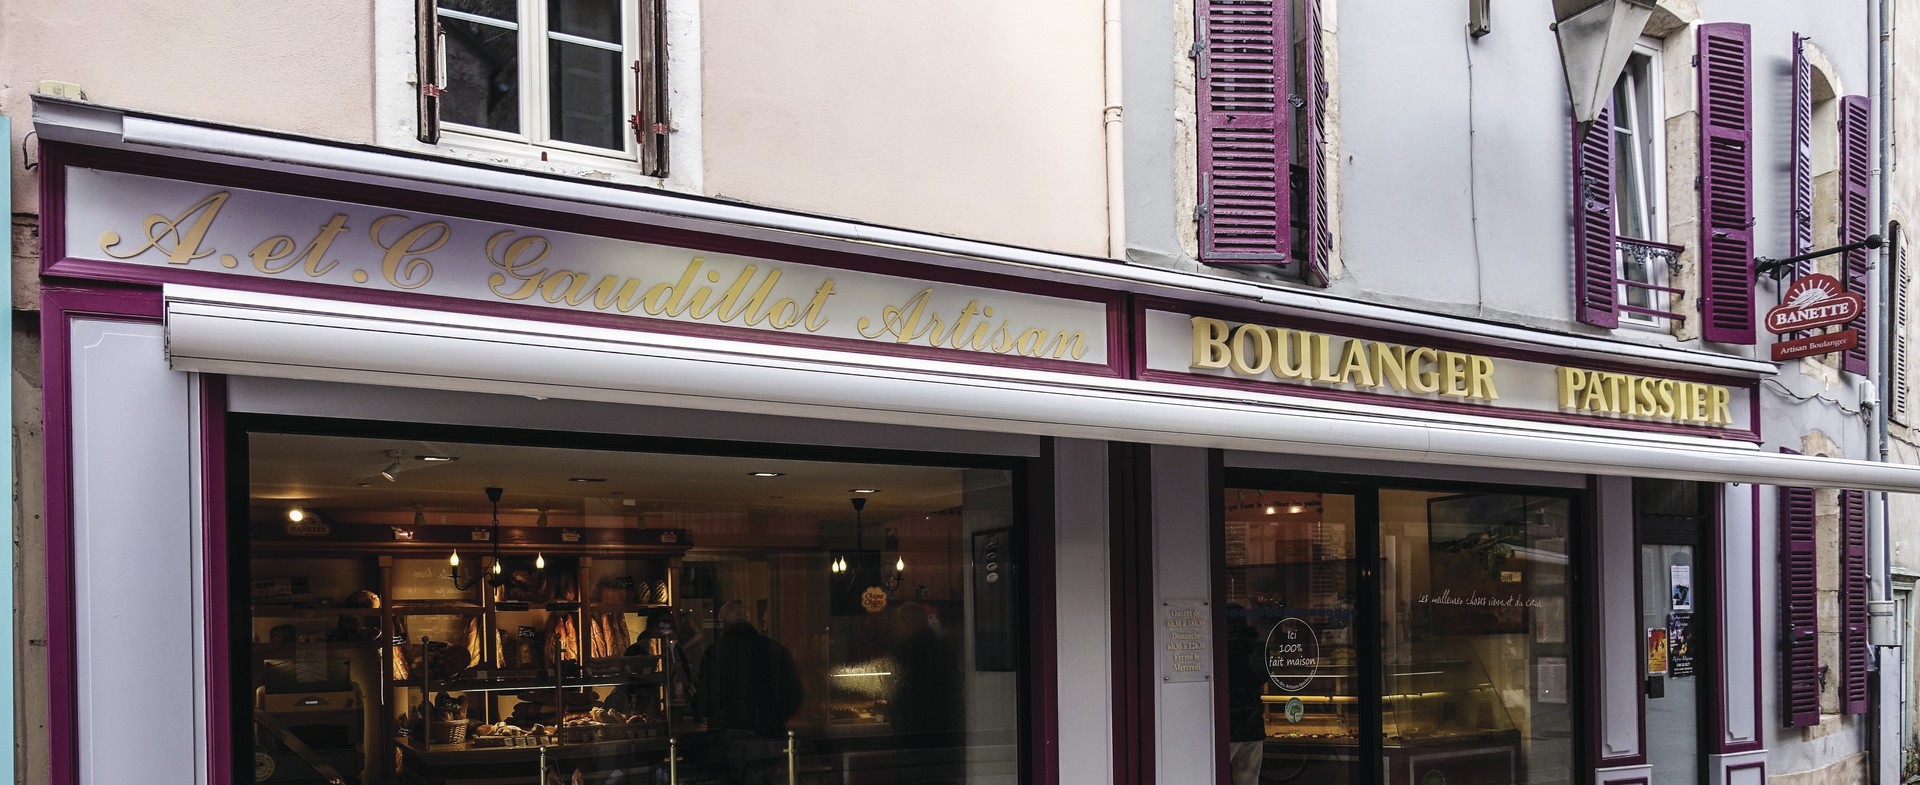 Boutique Boulangerie GAUDILLOT CEDRIC - Beaune